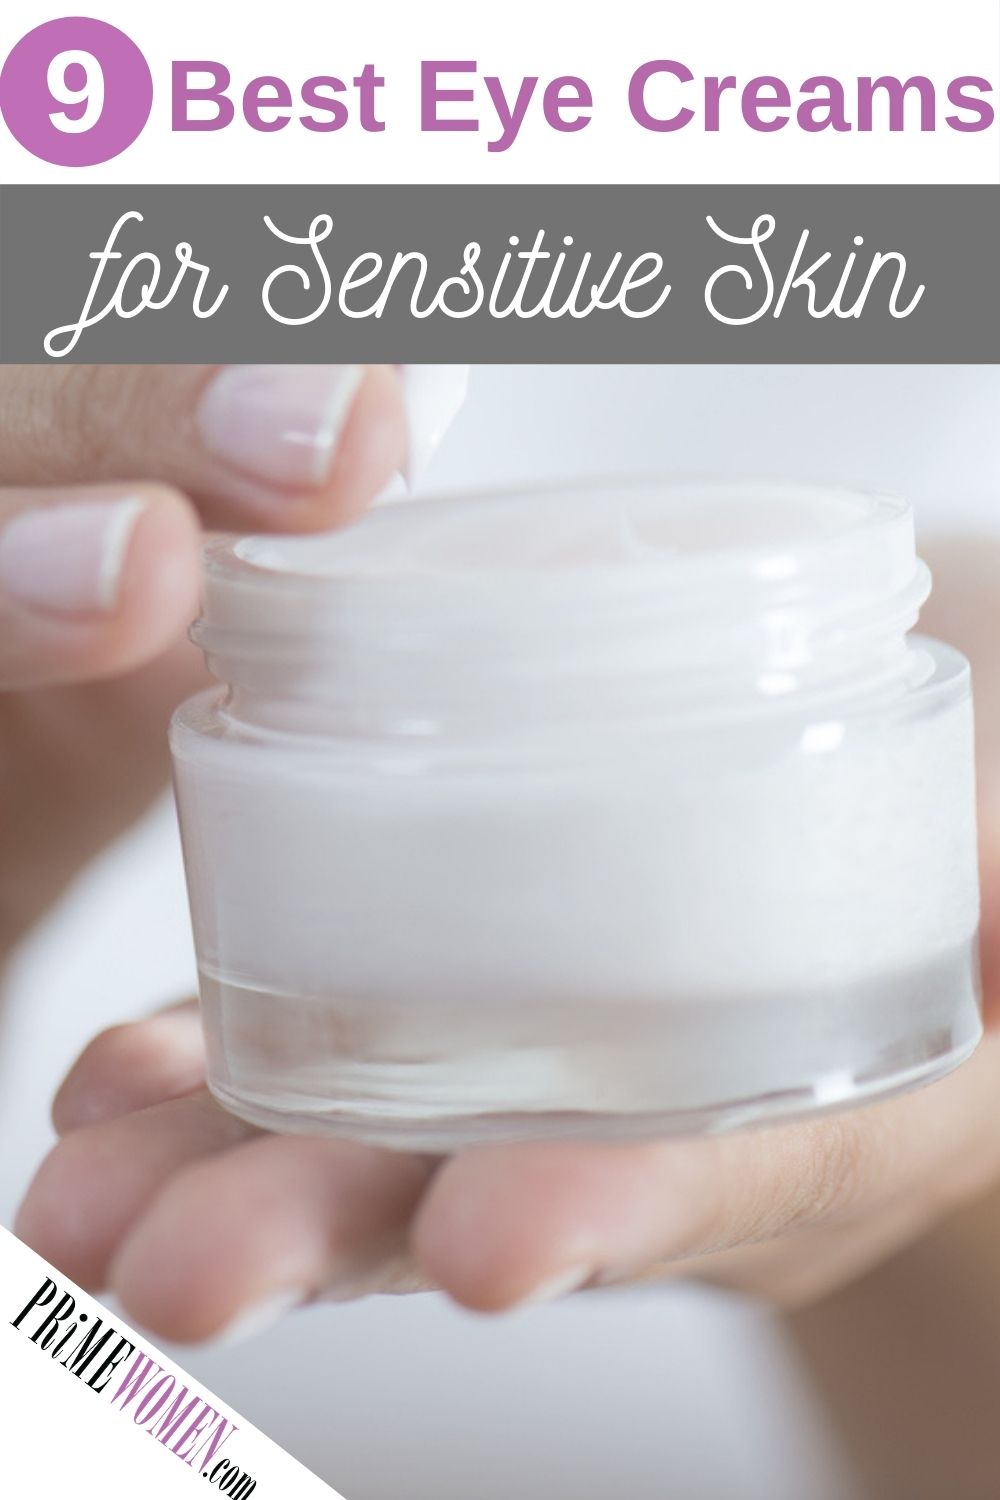 9 Best Eye Creams for Sensitive Skin